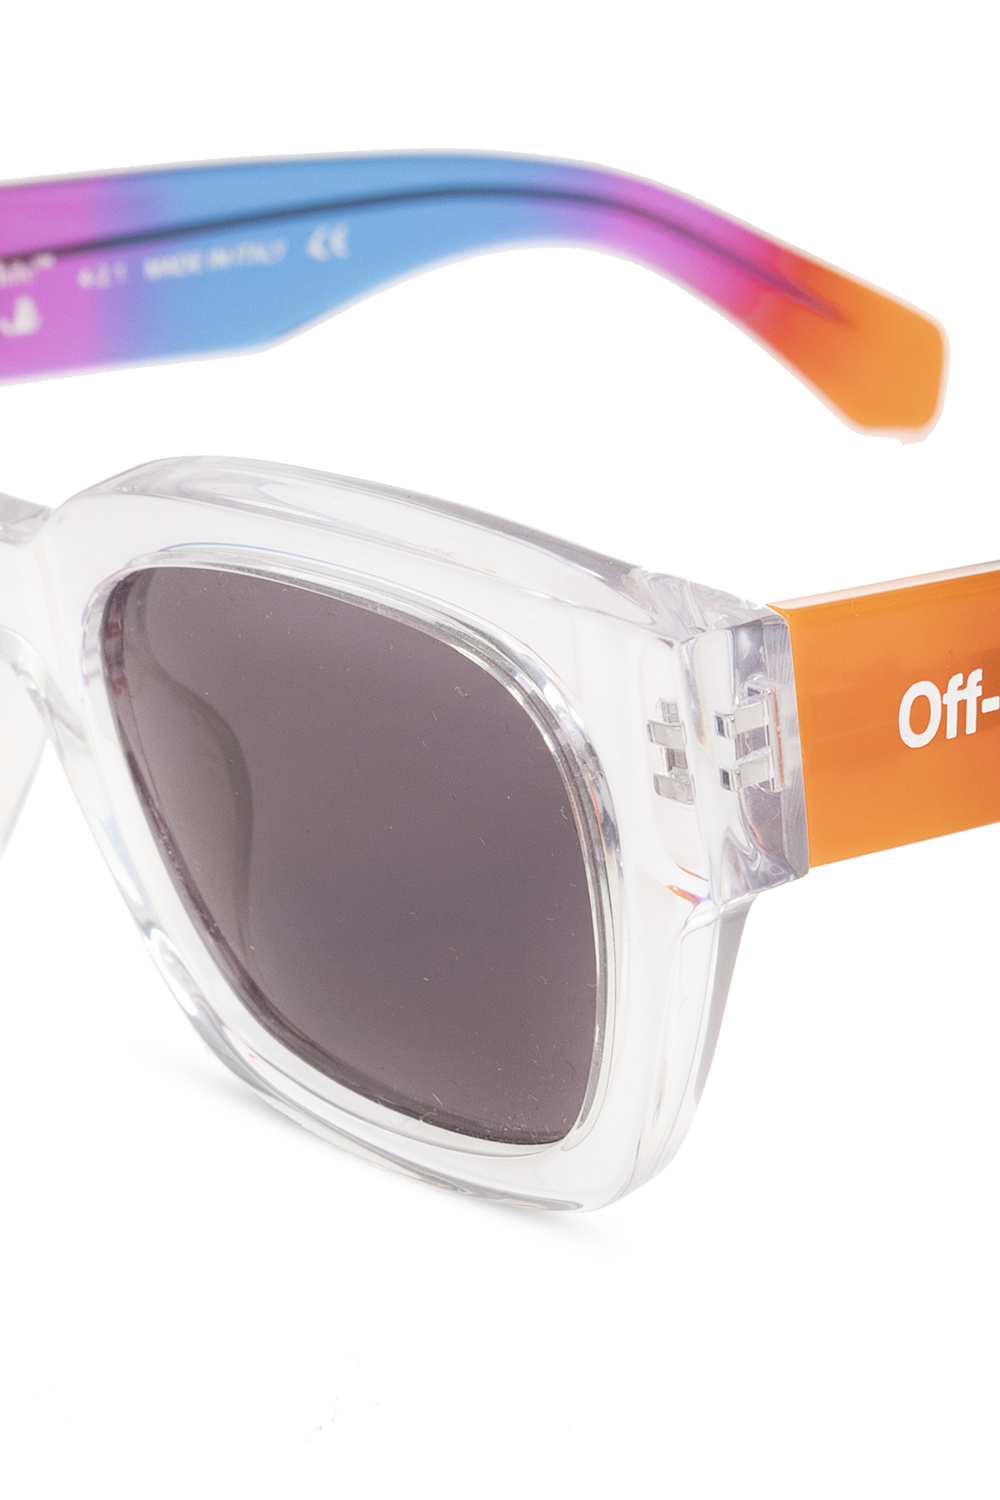 Off-White ‘Zurich’ Cebe sunglasses